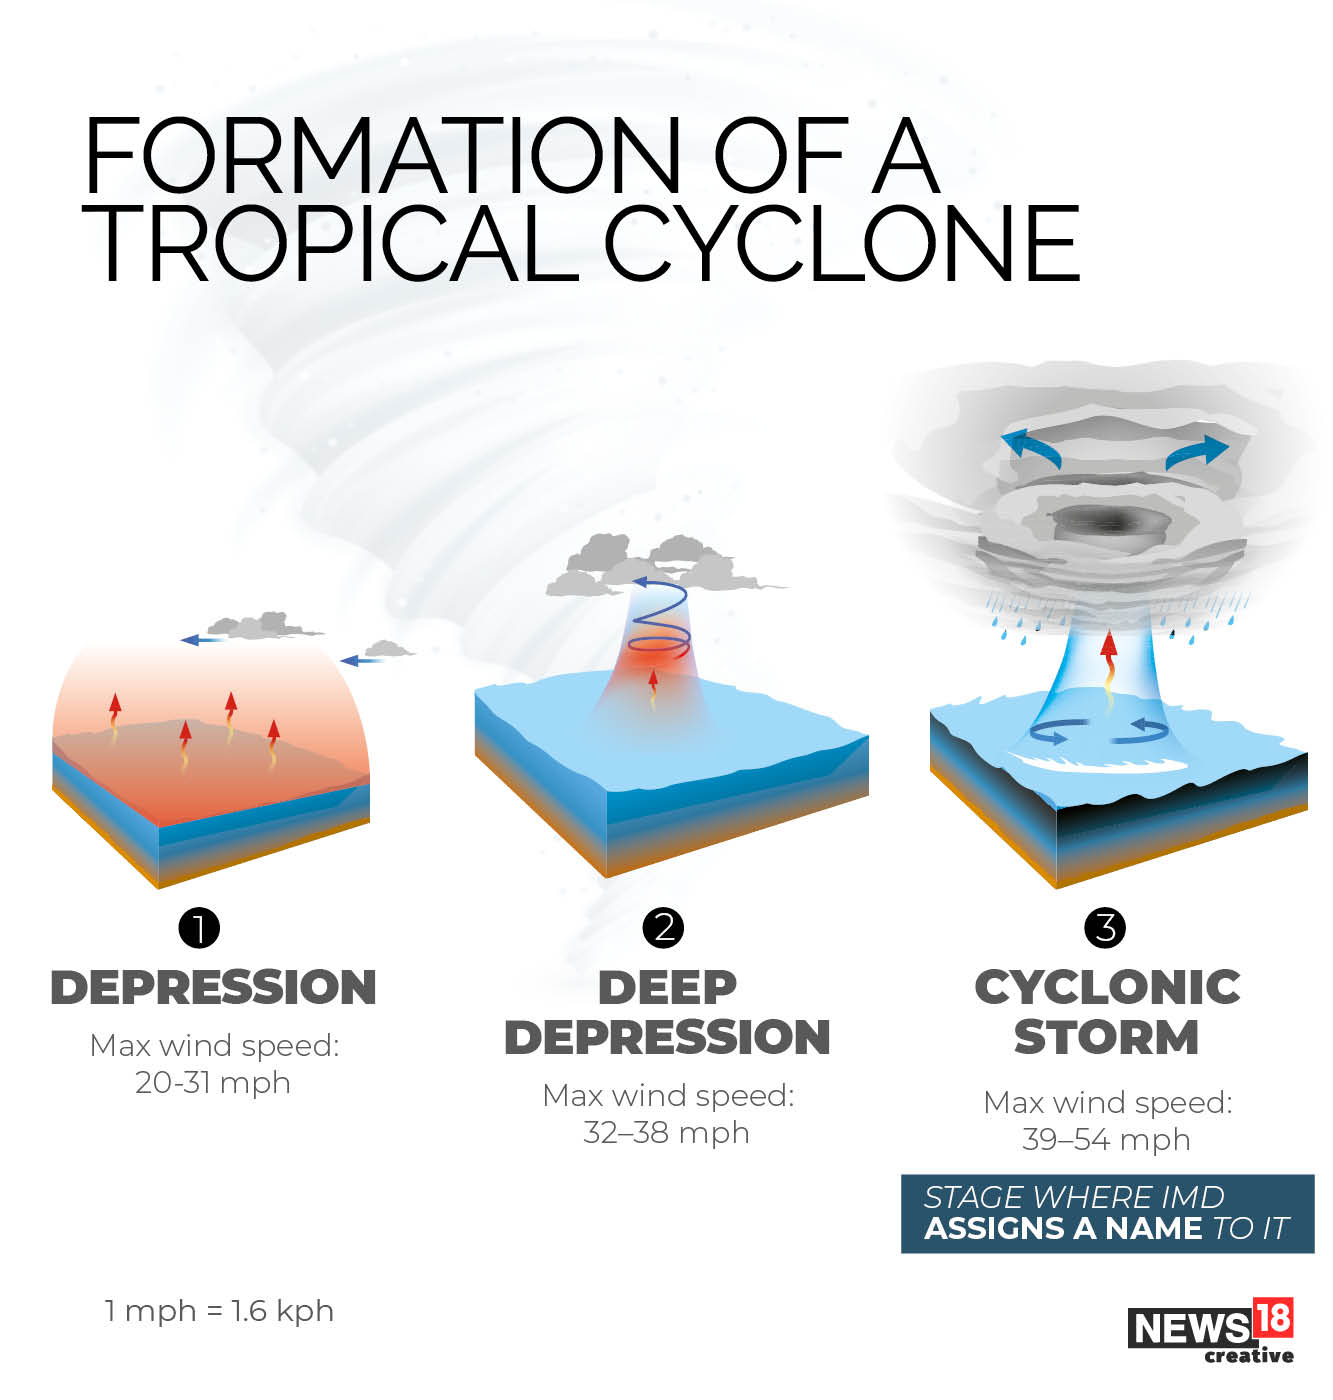 Tauktae: The devastating power of cyclones